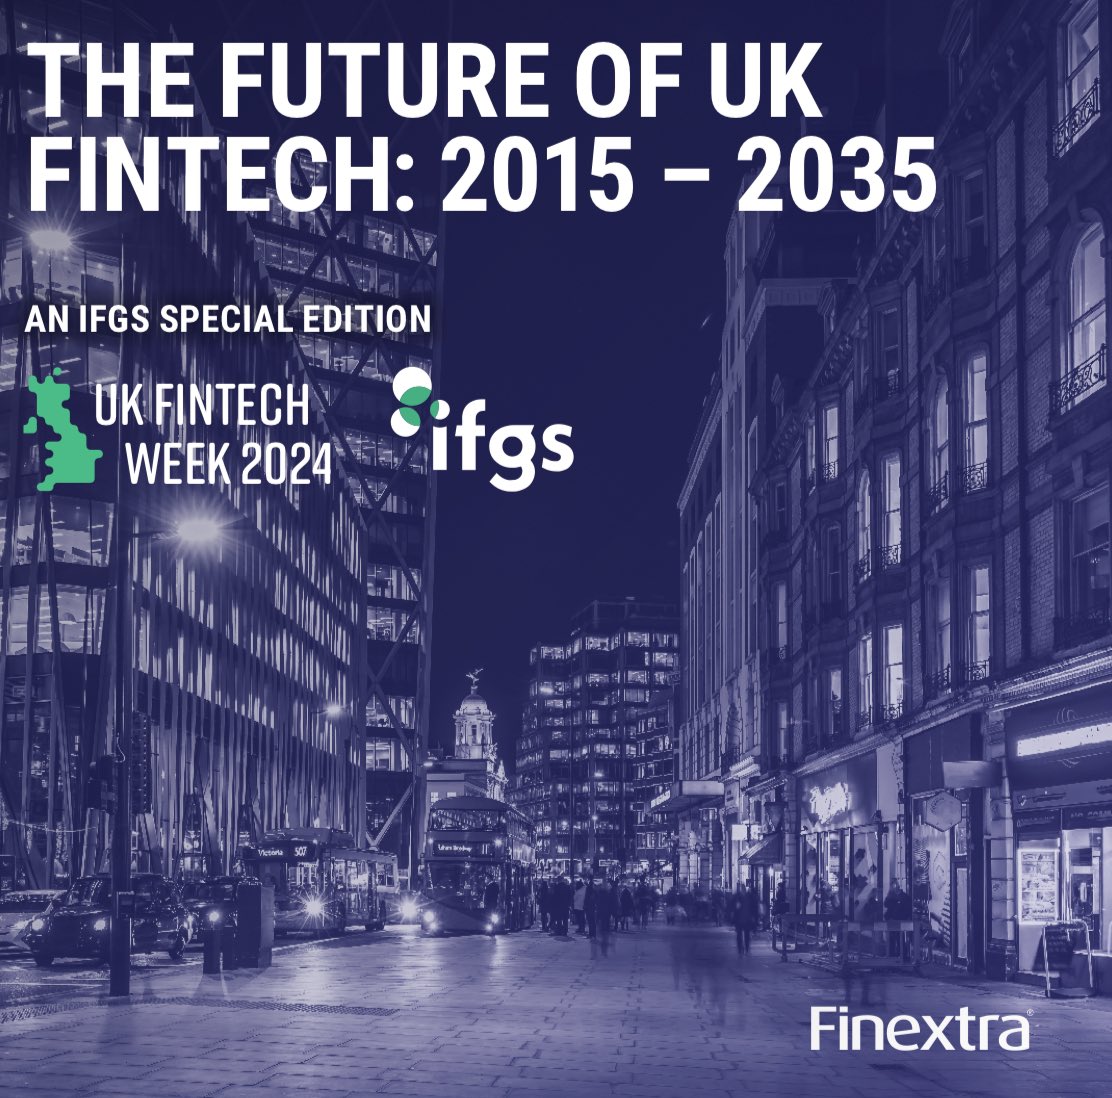 The Future of #UK #FinTech 2015-2035- Next Decade of #financialservices & #Innovation-@Finextra #Finserv #Banking #DigitalTransformation #AI #GenAI #embeddedfinance #openfinance #Bigdata #Finance #regulation #regtech @Damien_CABADI @RAlexJimenez @efipm finextra.com/researcharticl…